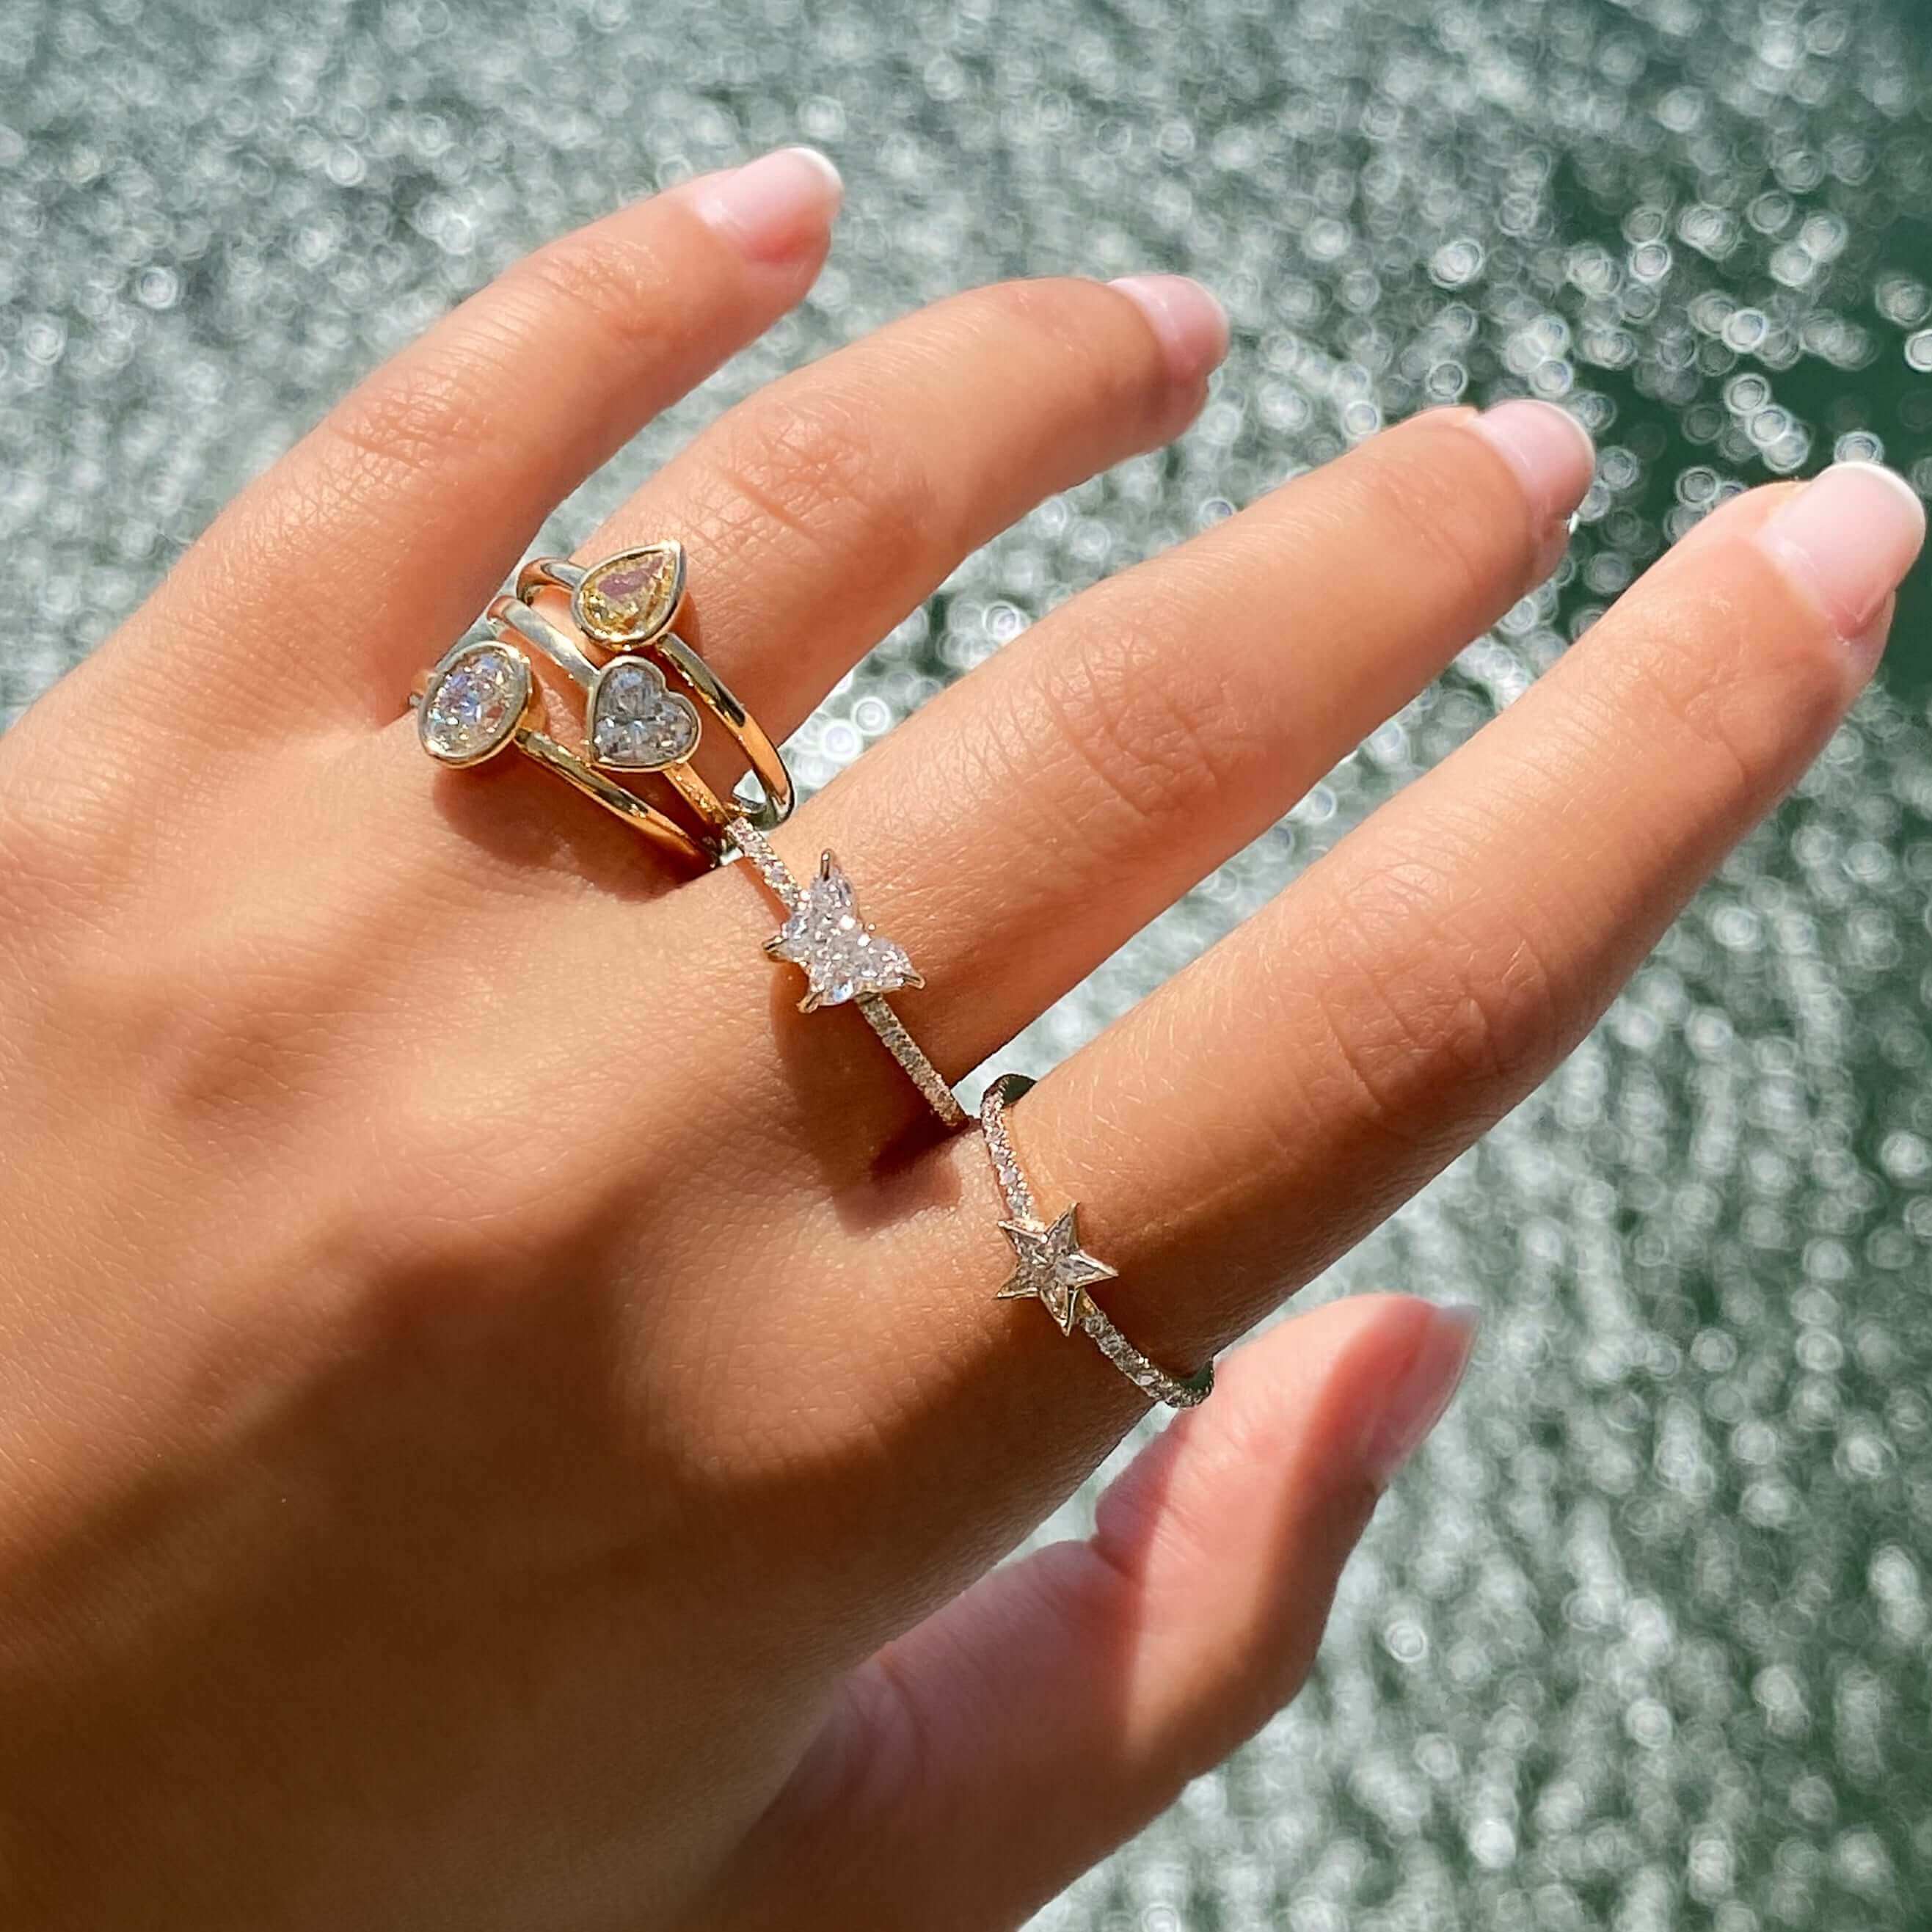 18K Gold Solid Butterfly Shaped Diamond Pave Ring - Rings - Izakov Diamonds + Fine Jewelry